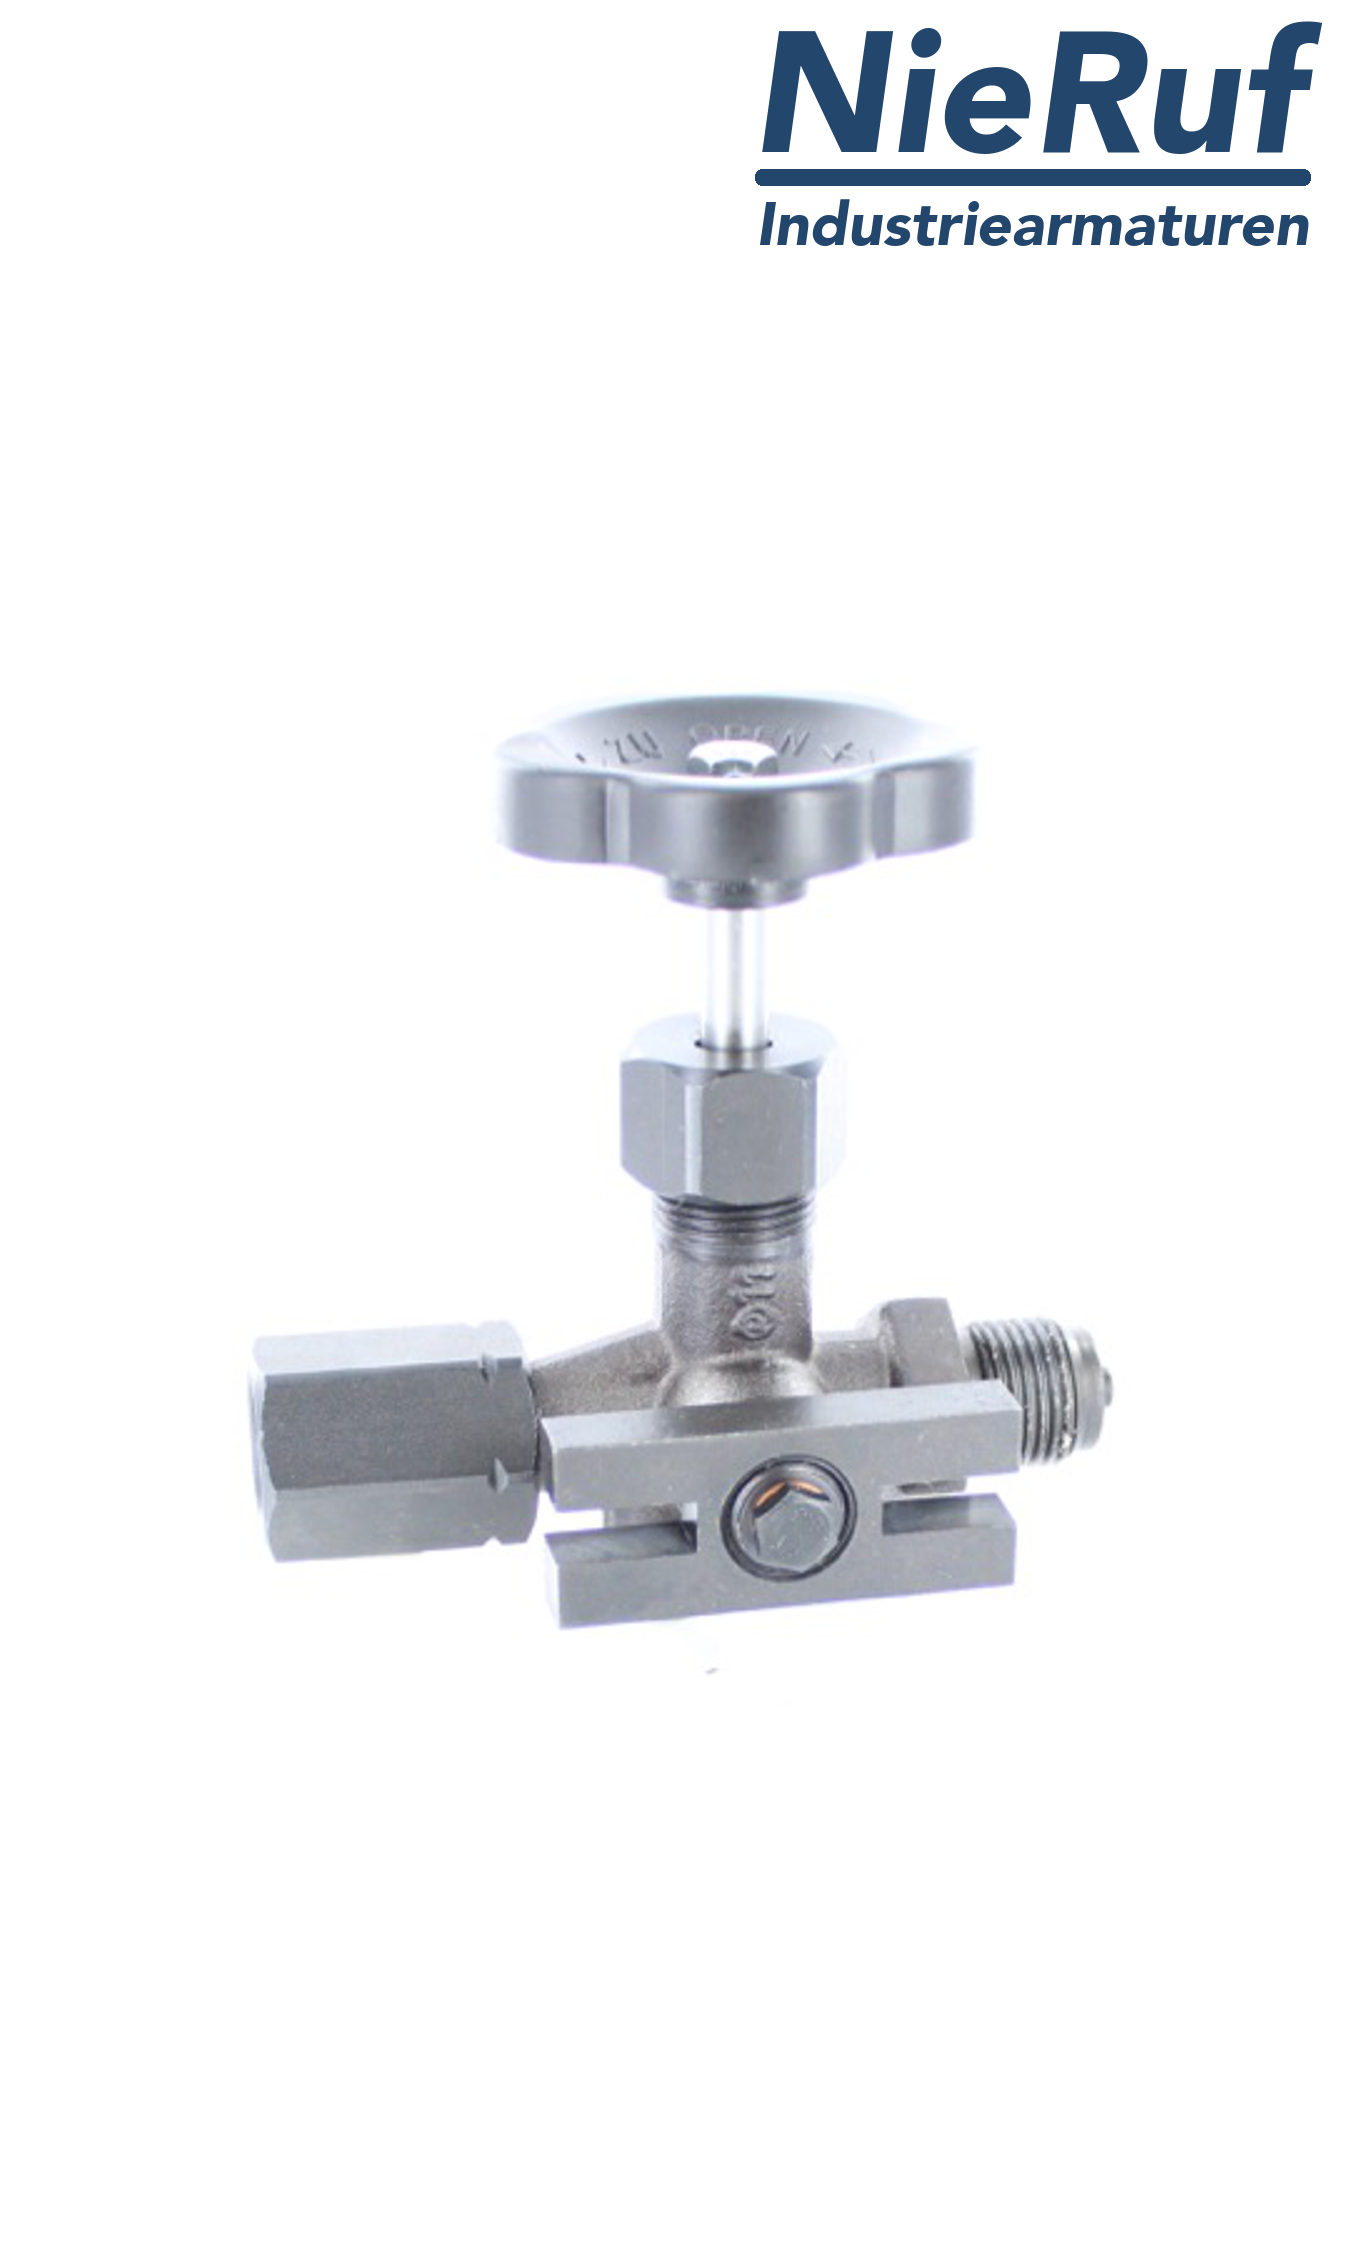 manometer gauge valves male thread x sleeve x test flange 60x25 mm DIN 16271 steel 1.0460 400 bar